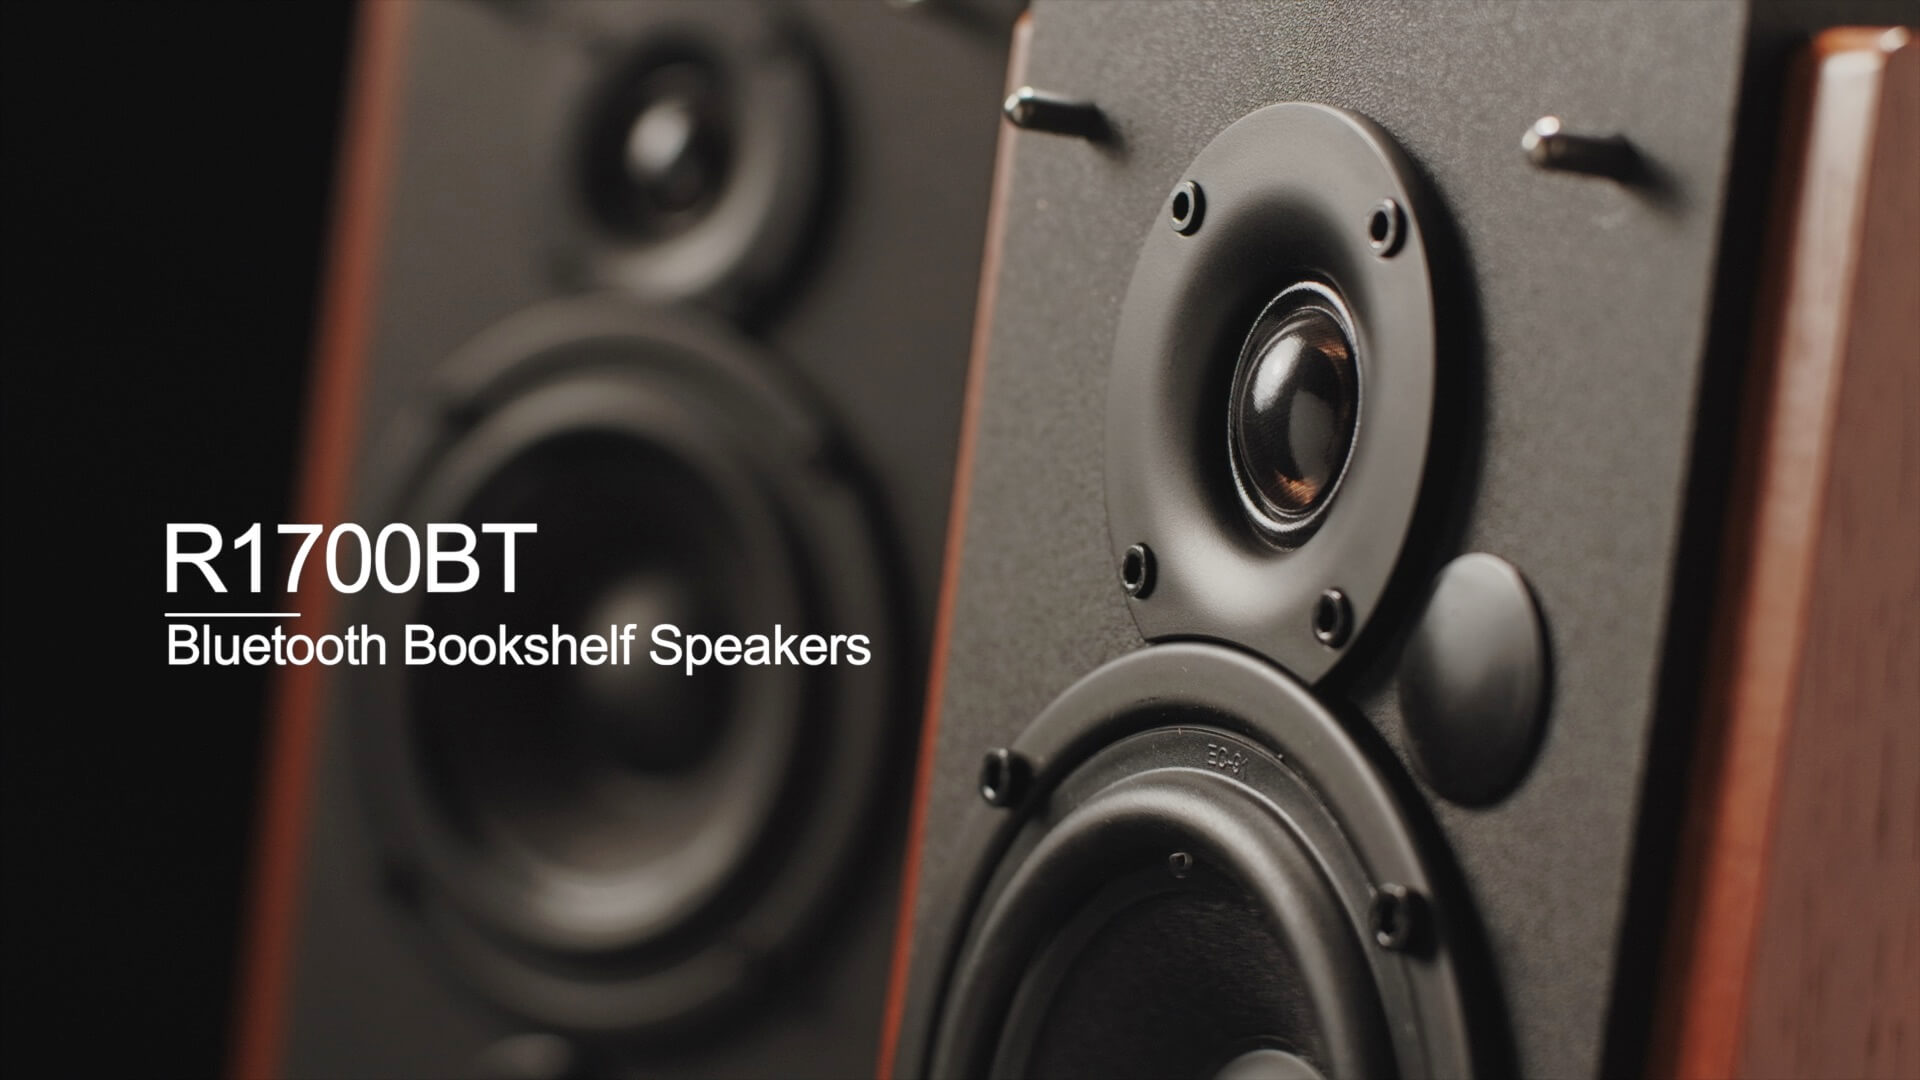 R1700BT 2.0 Bluetooth Bookshelf Speaker